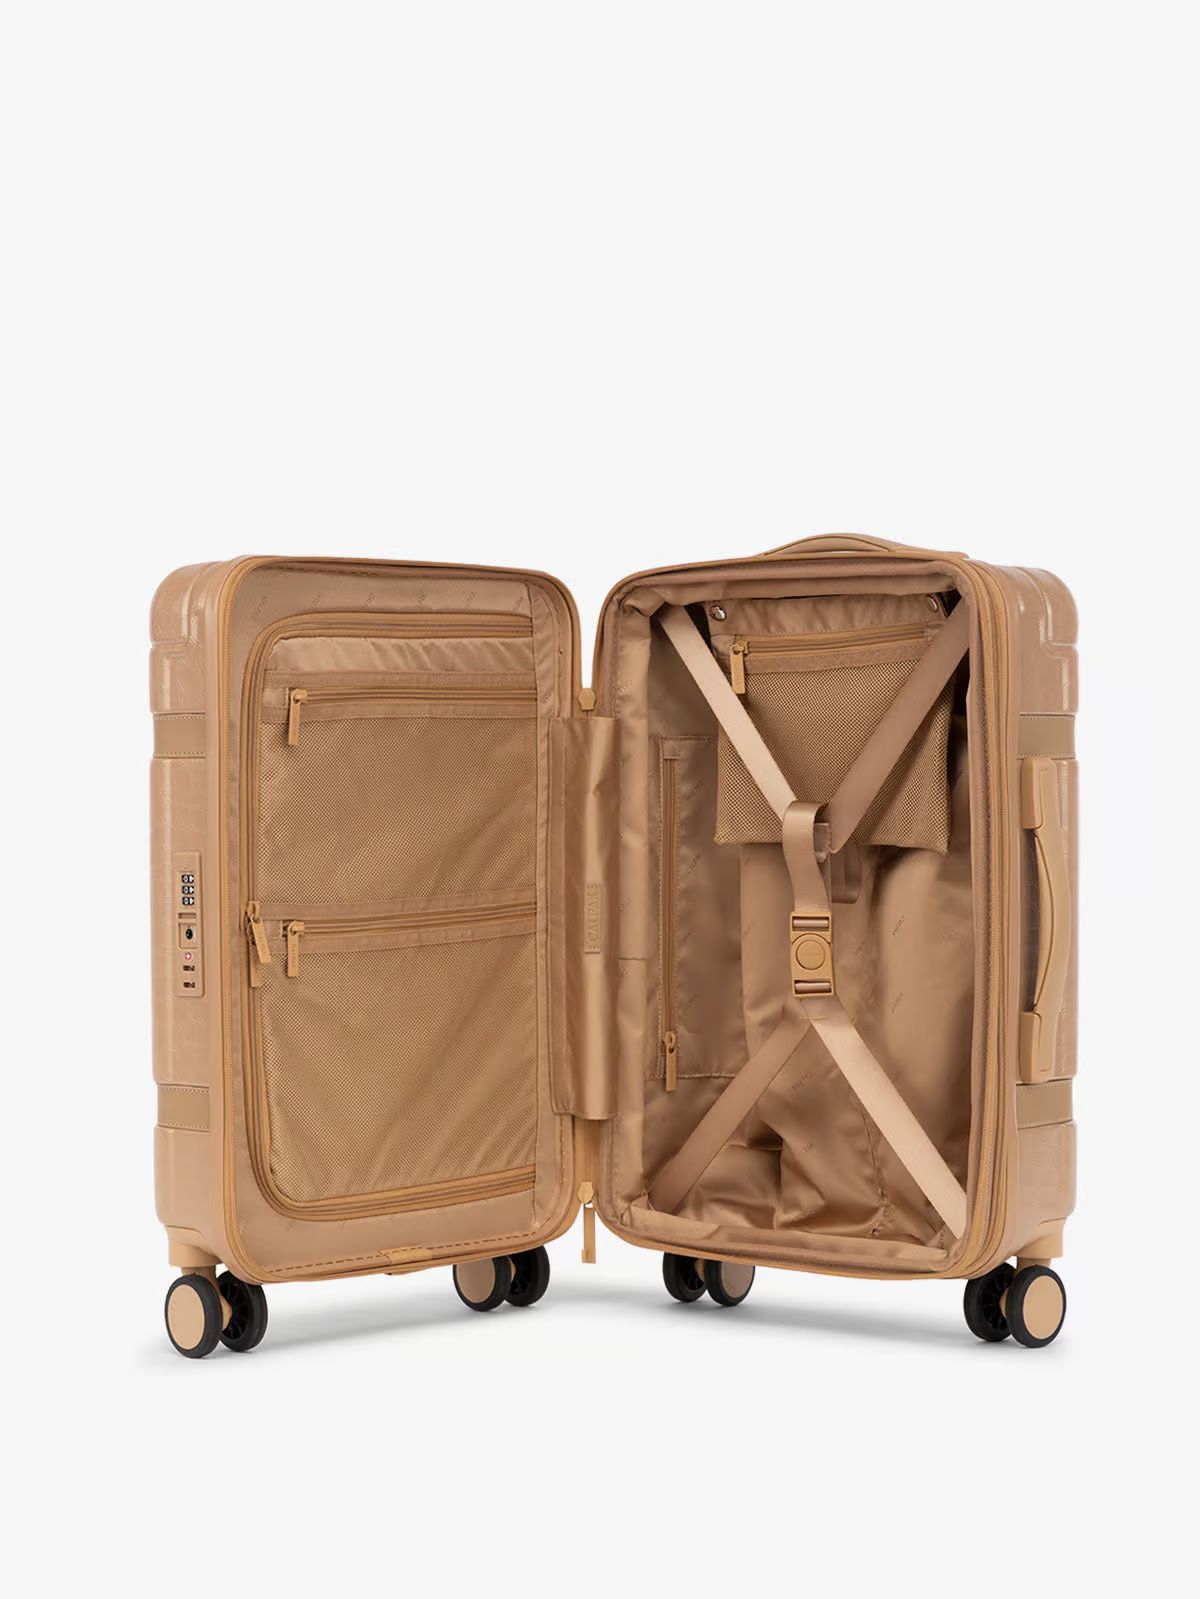 Trnk 2-Piece Luggage Set | CALPAK | CALPAK Travel